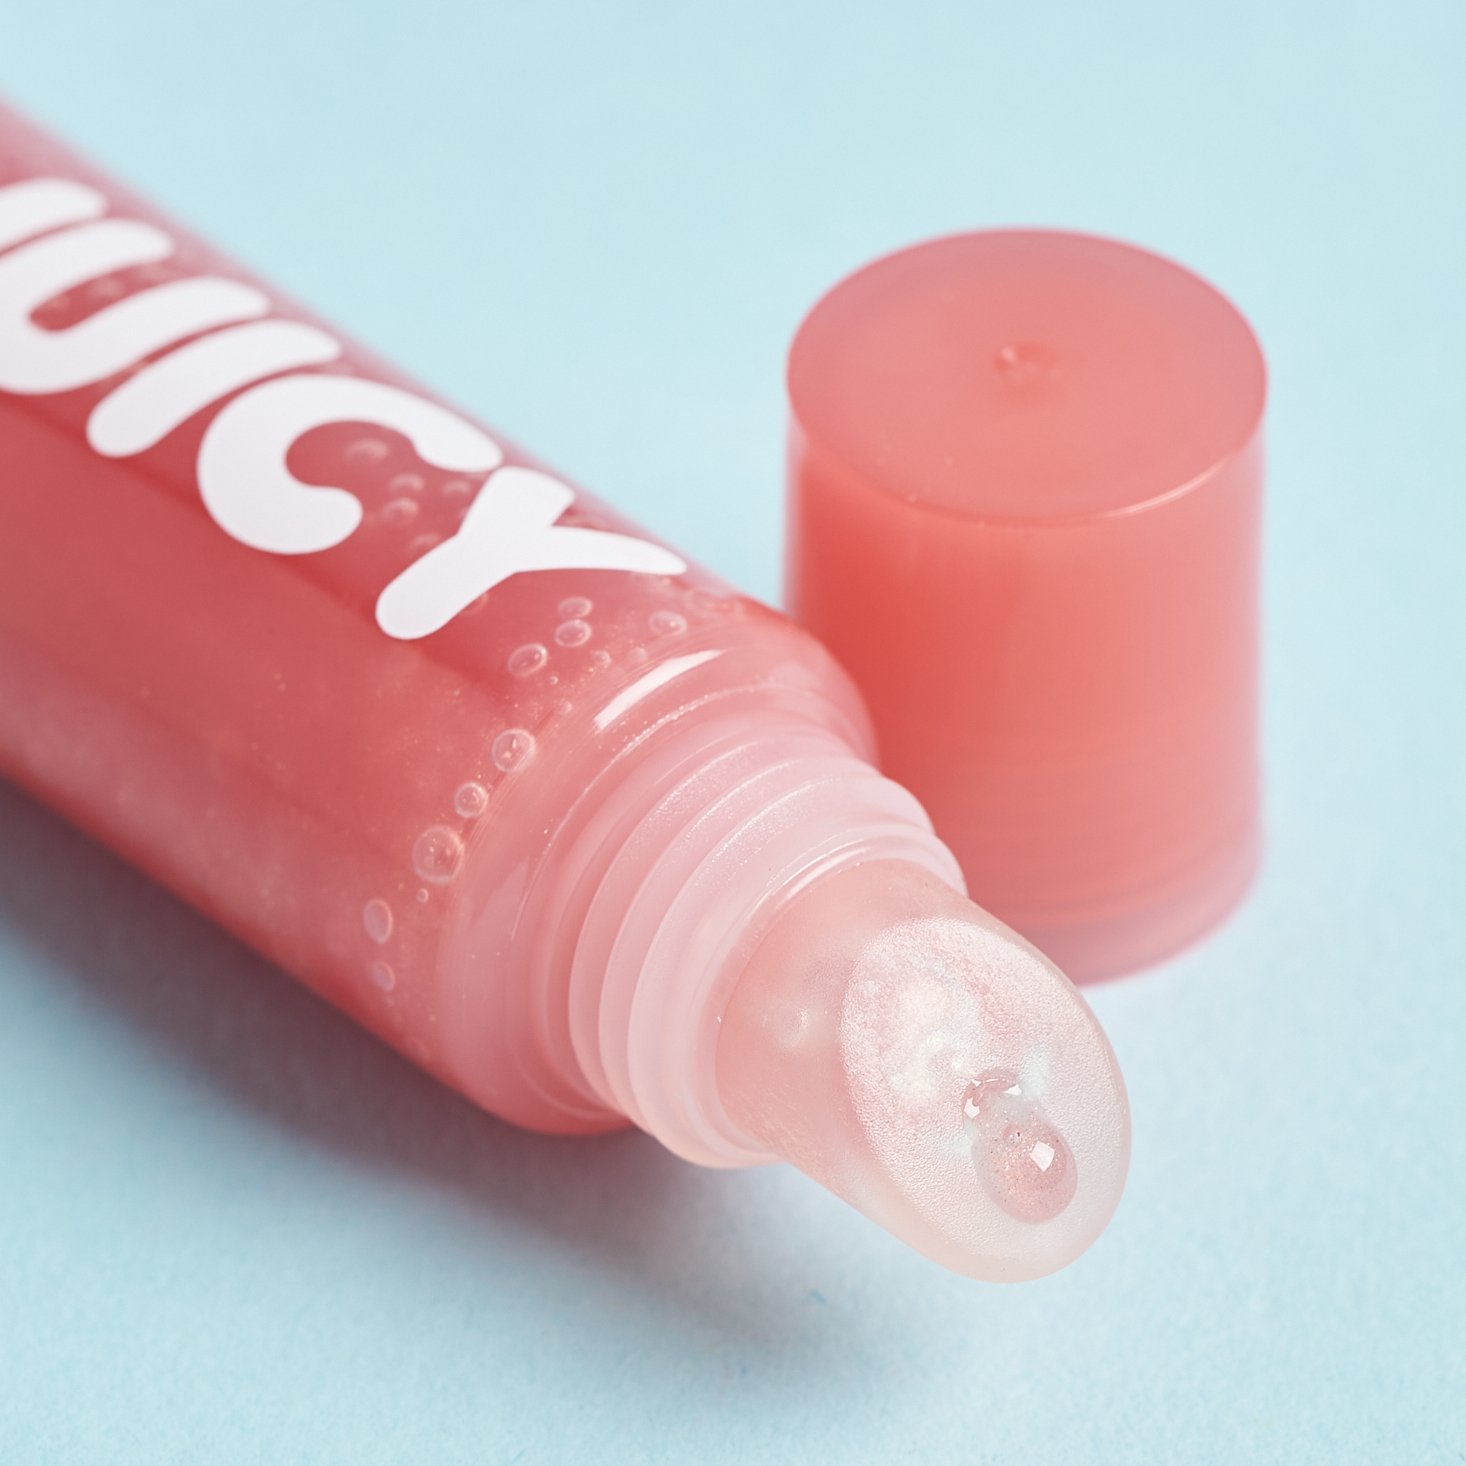 opened pink lip gloss tube showing applicator